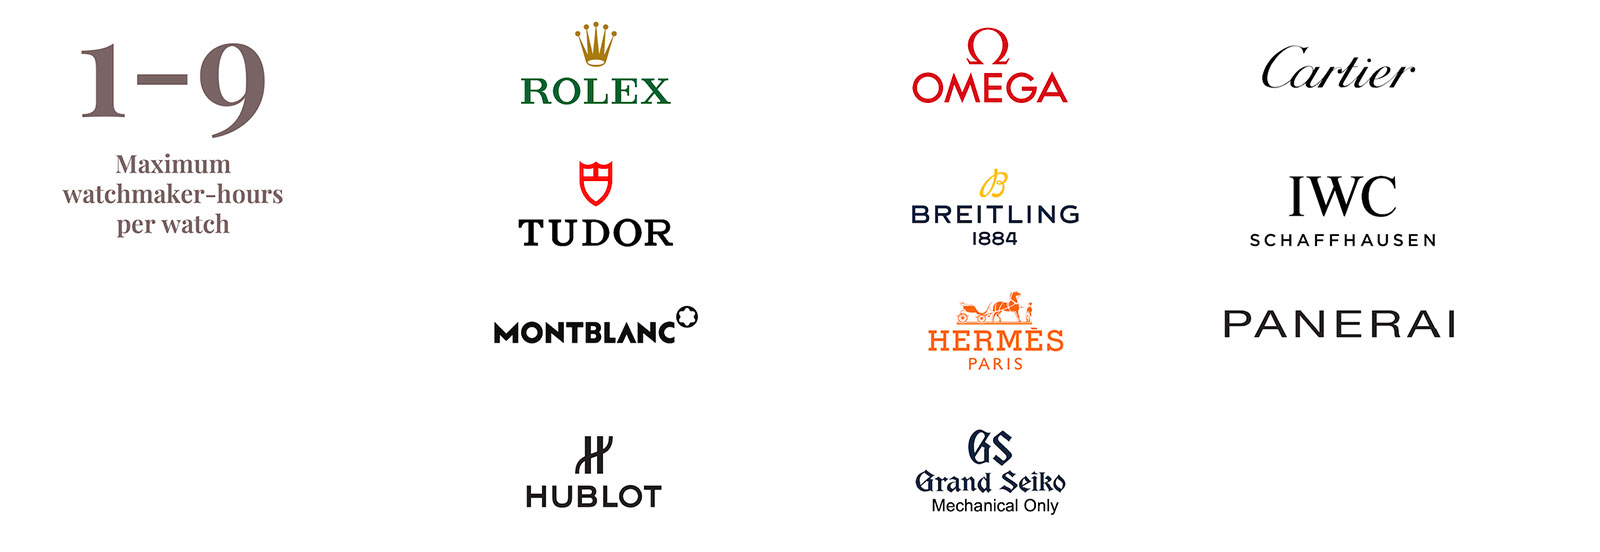 Ranking Watch Brands - Luxury Brand Pyramid 